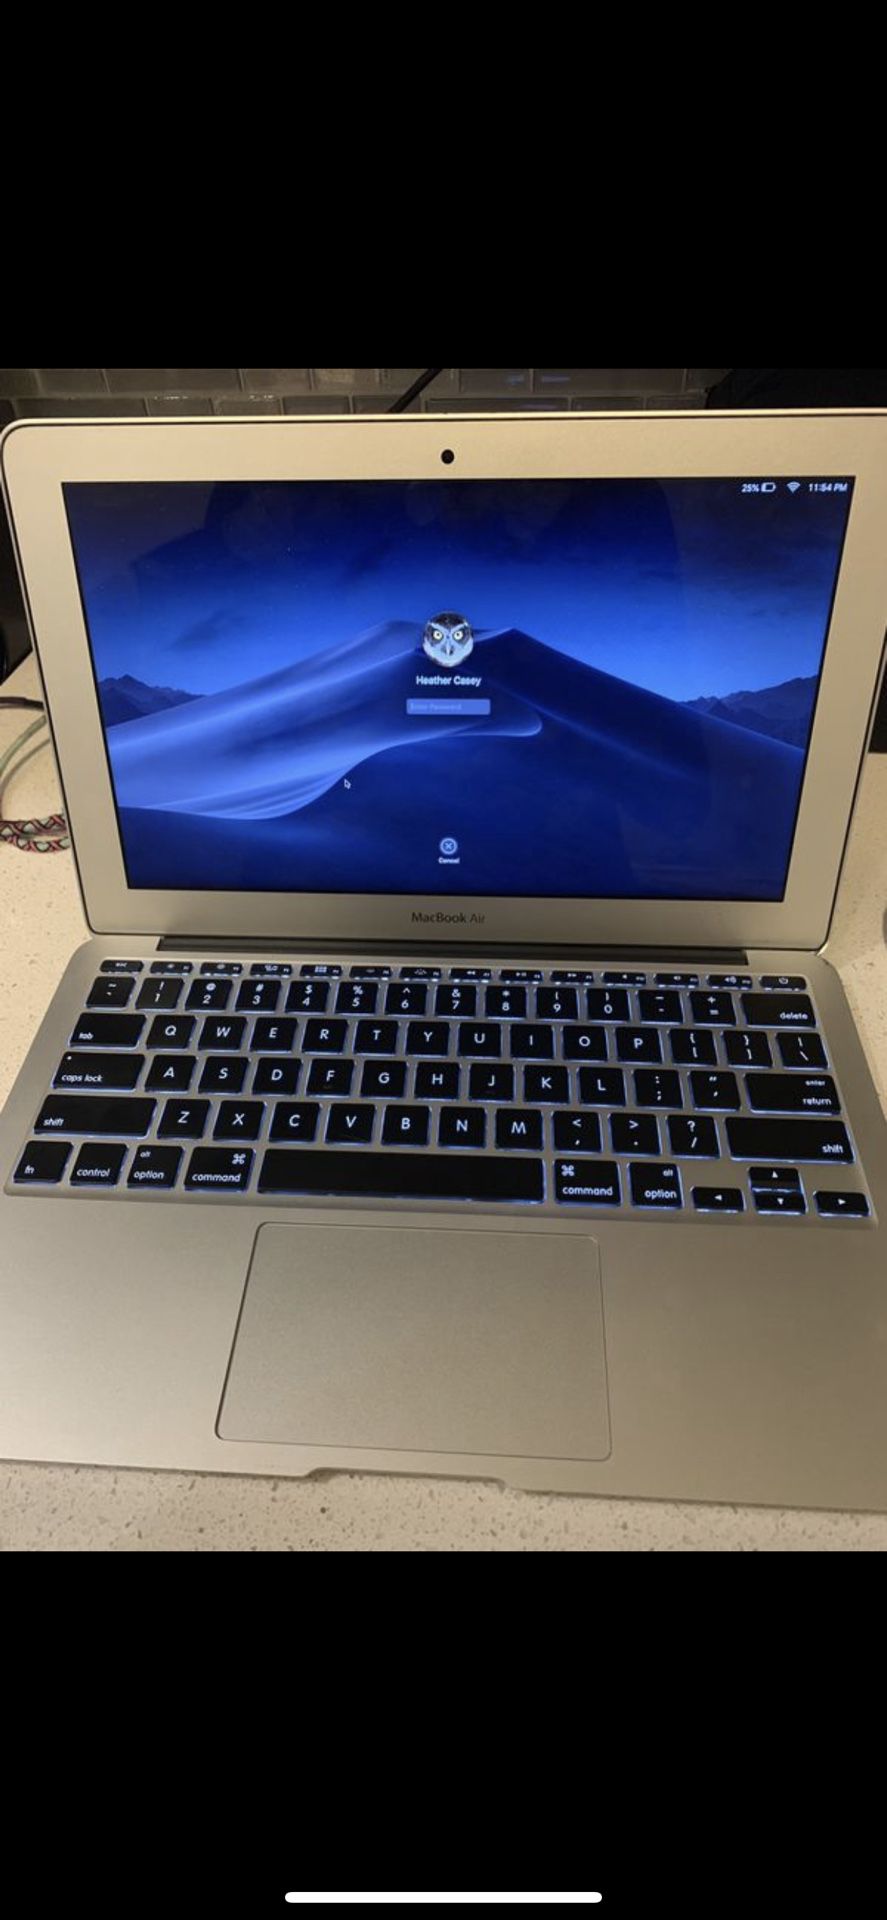 Apple MacBook Air MD711LL/B 11.6-Inch Laptop (4GB RAM, 128 GB HDD,OS X Mavericks) (Refurbished)